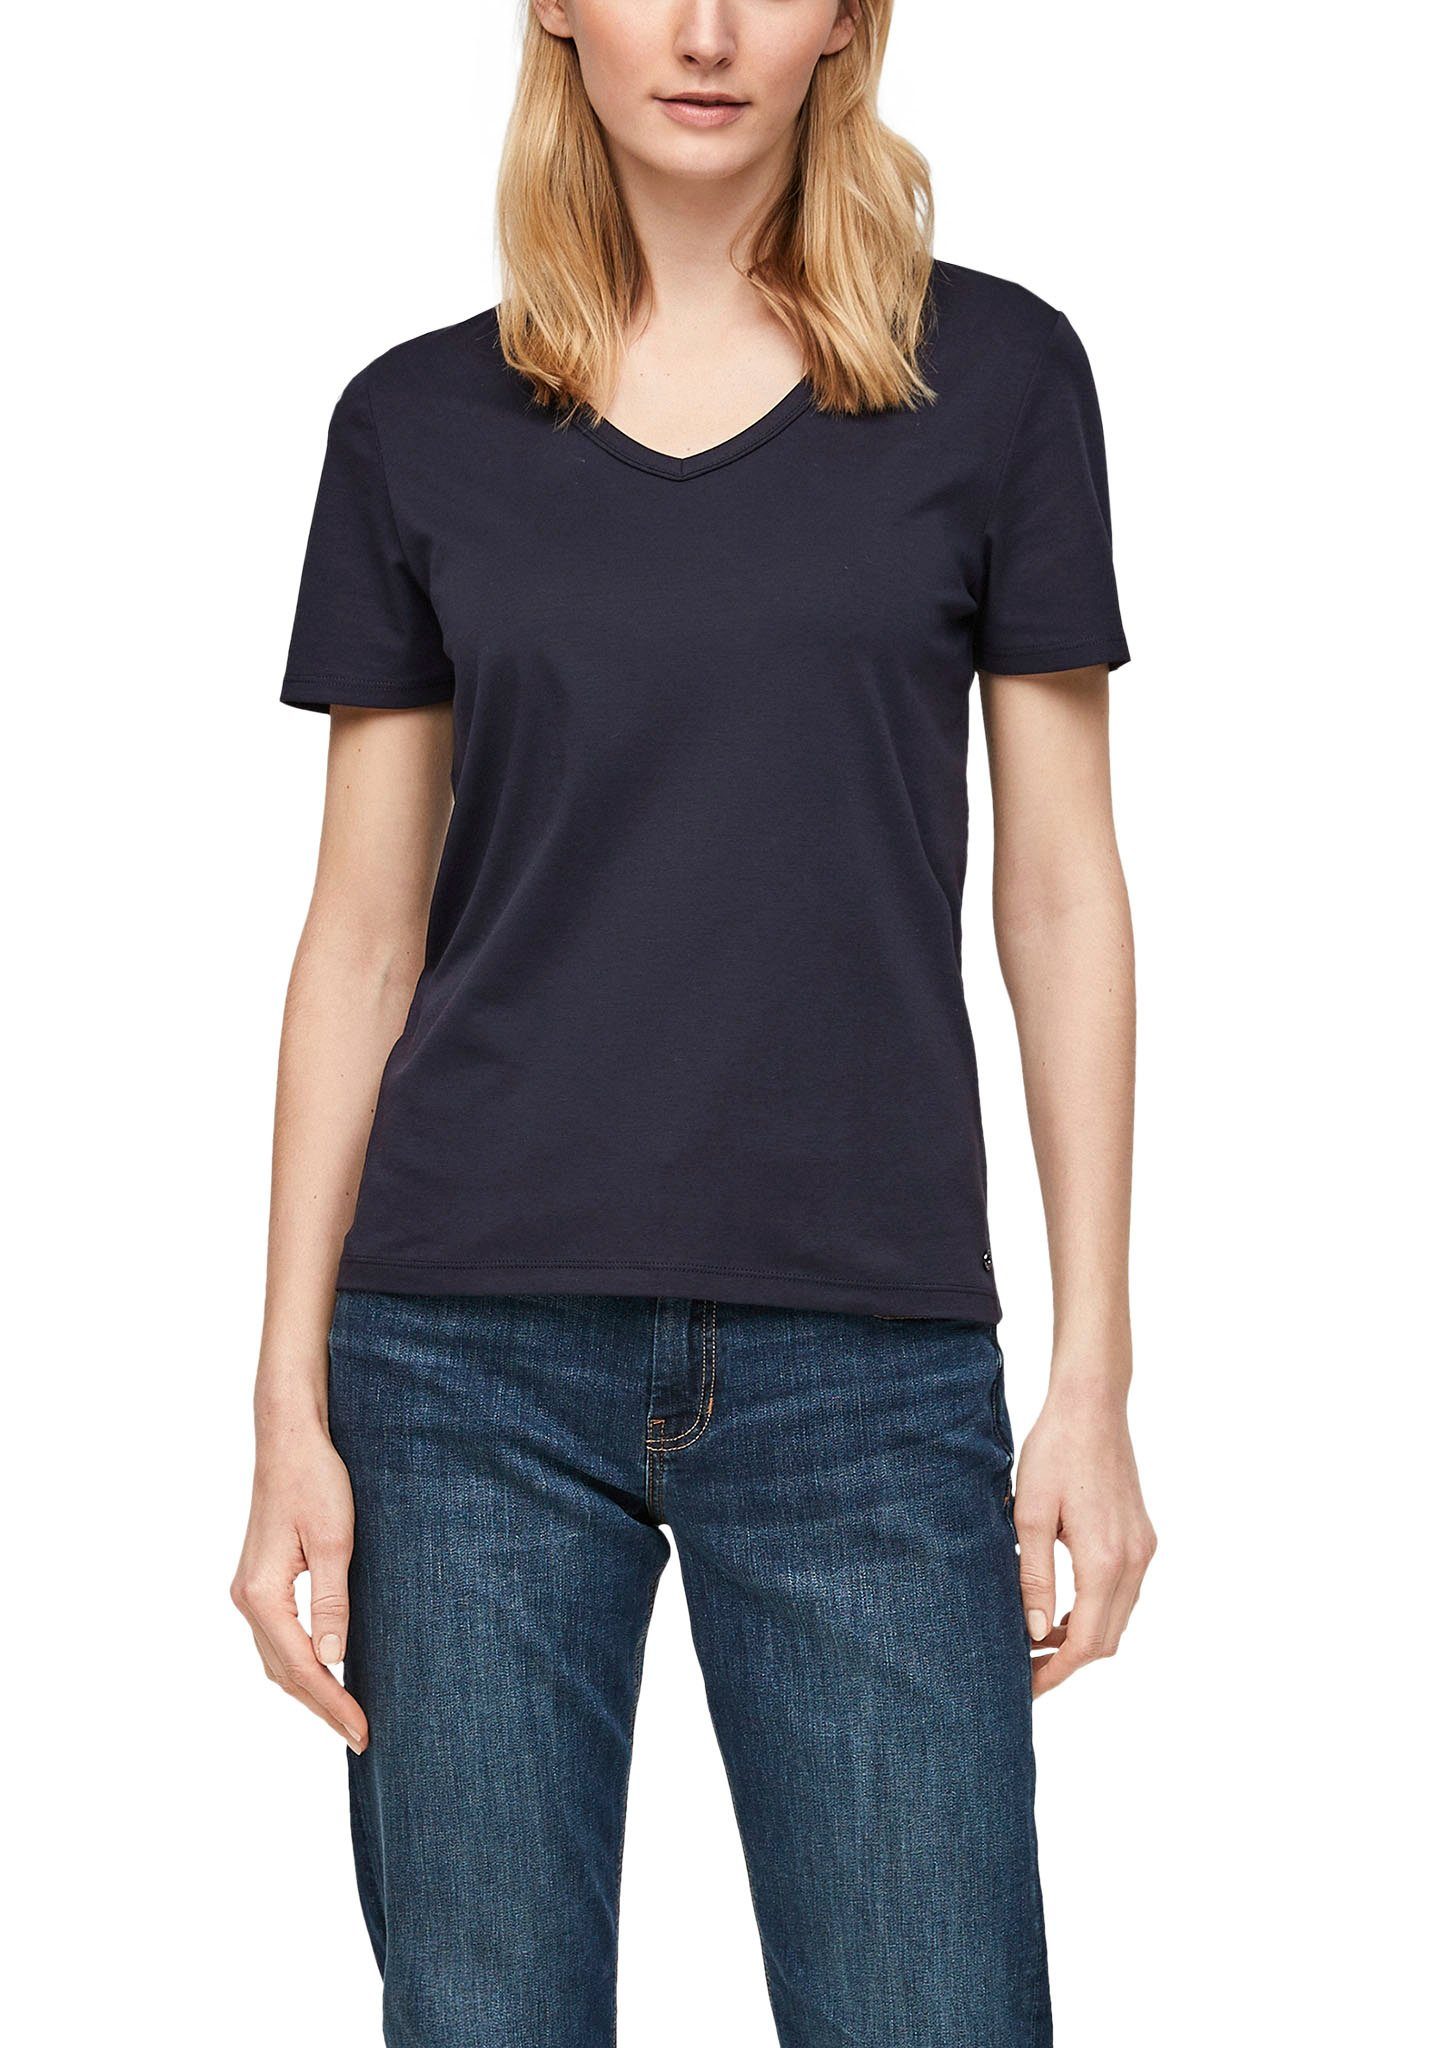 s.Oliver T-Shirt mit umgenähtem Saum dunkelblau